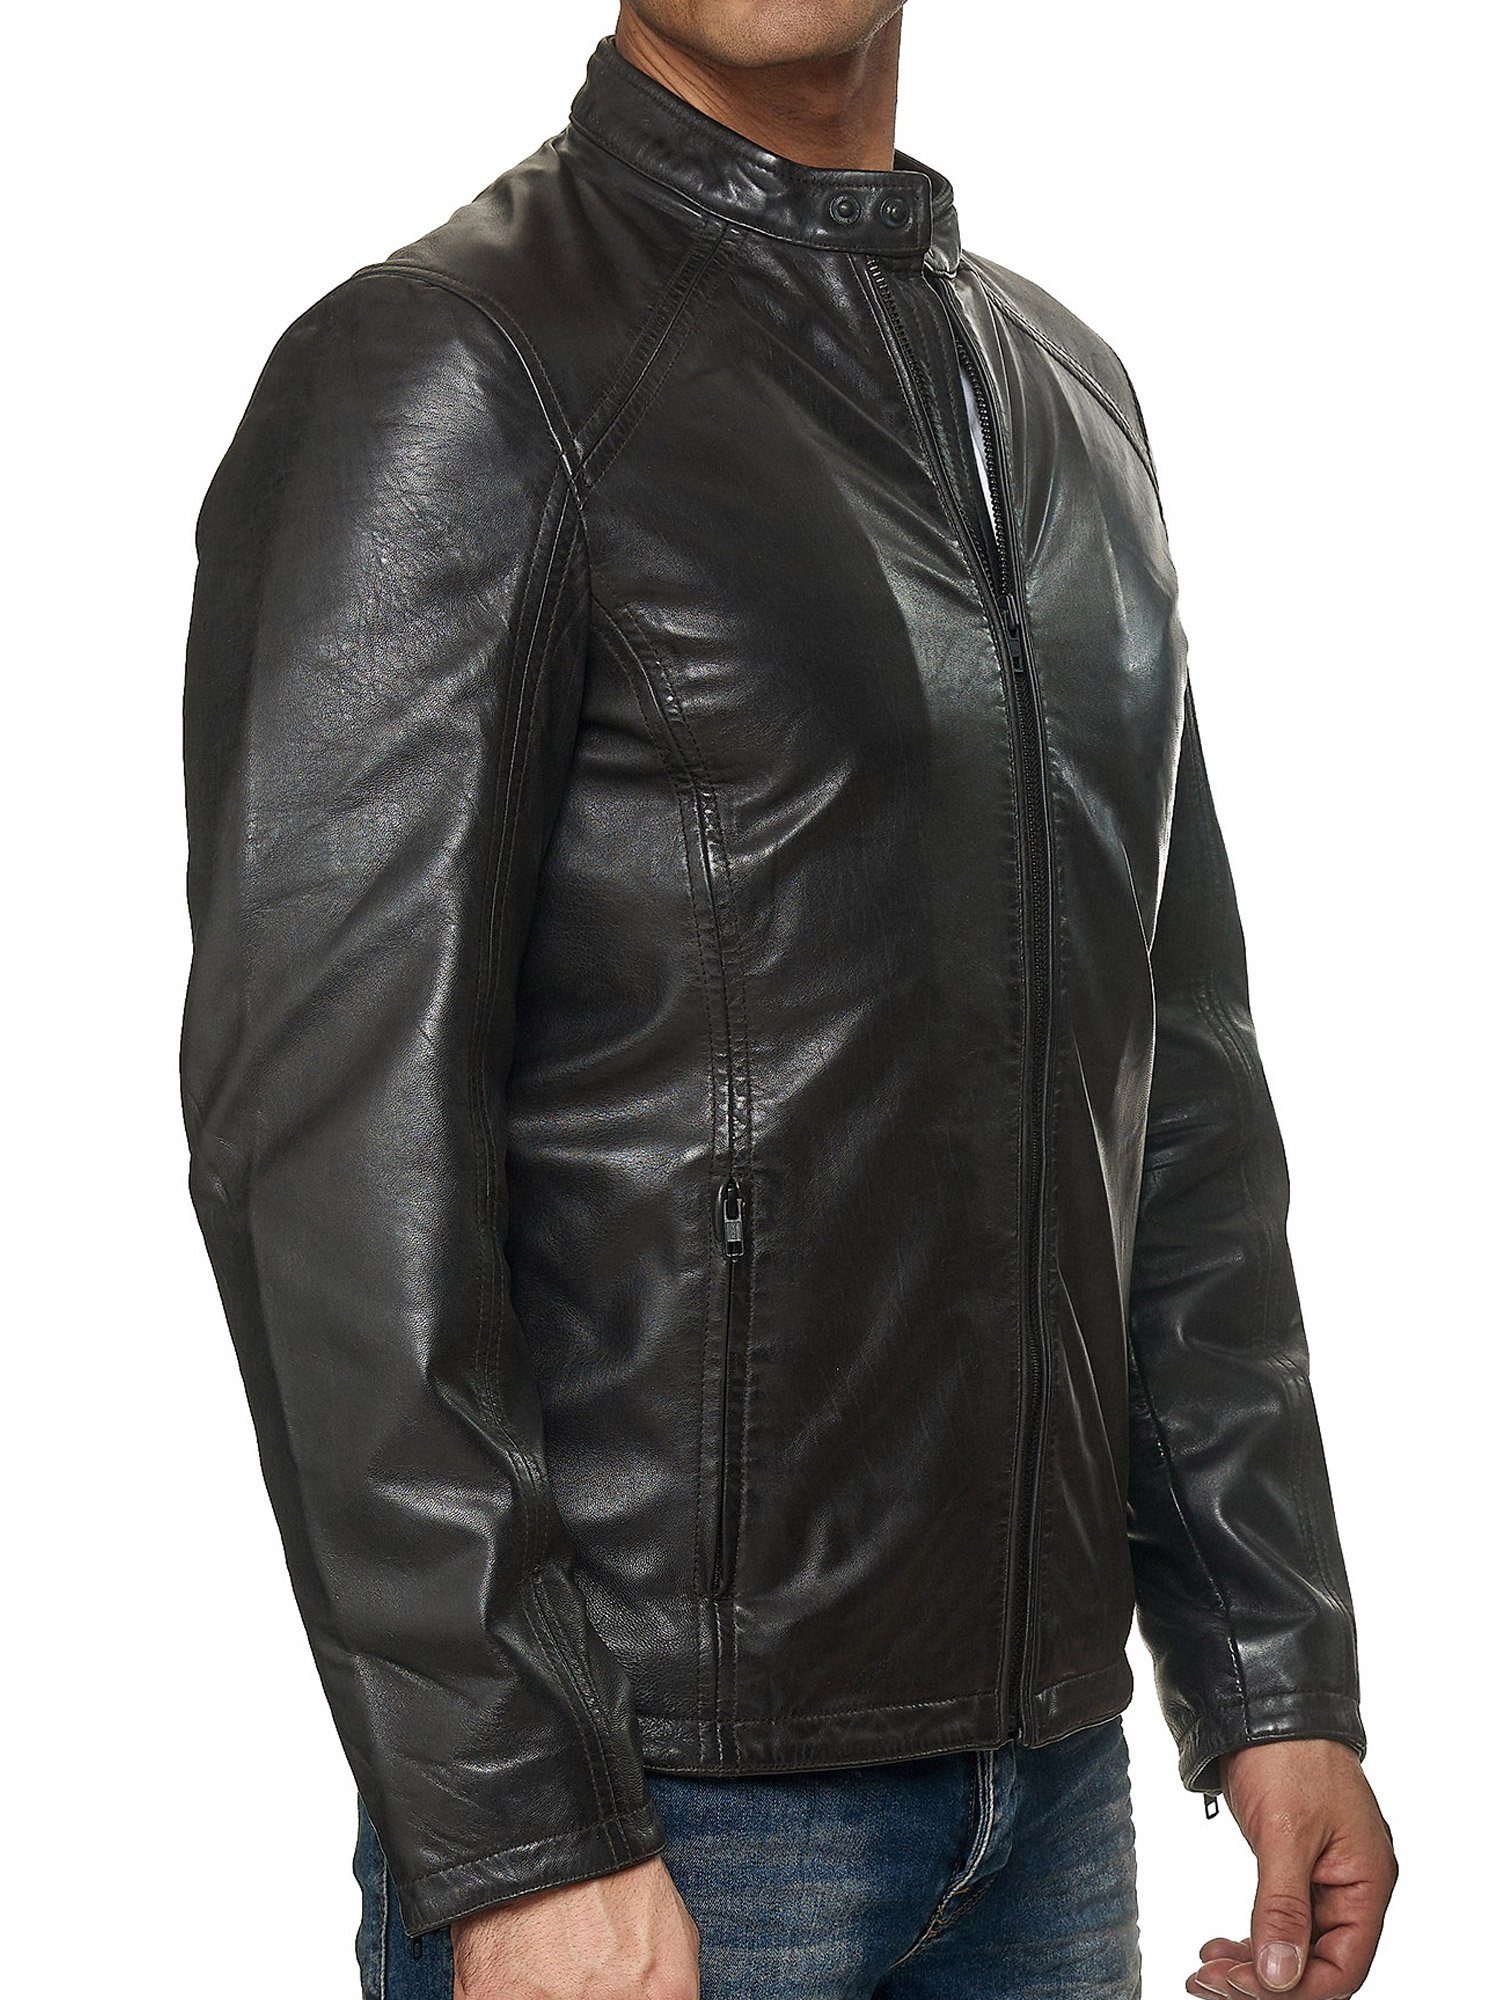 Echtleder 19707 schwarz moderne & zeitlose Lederjacke Jacke Tazzio